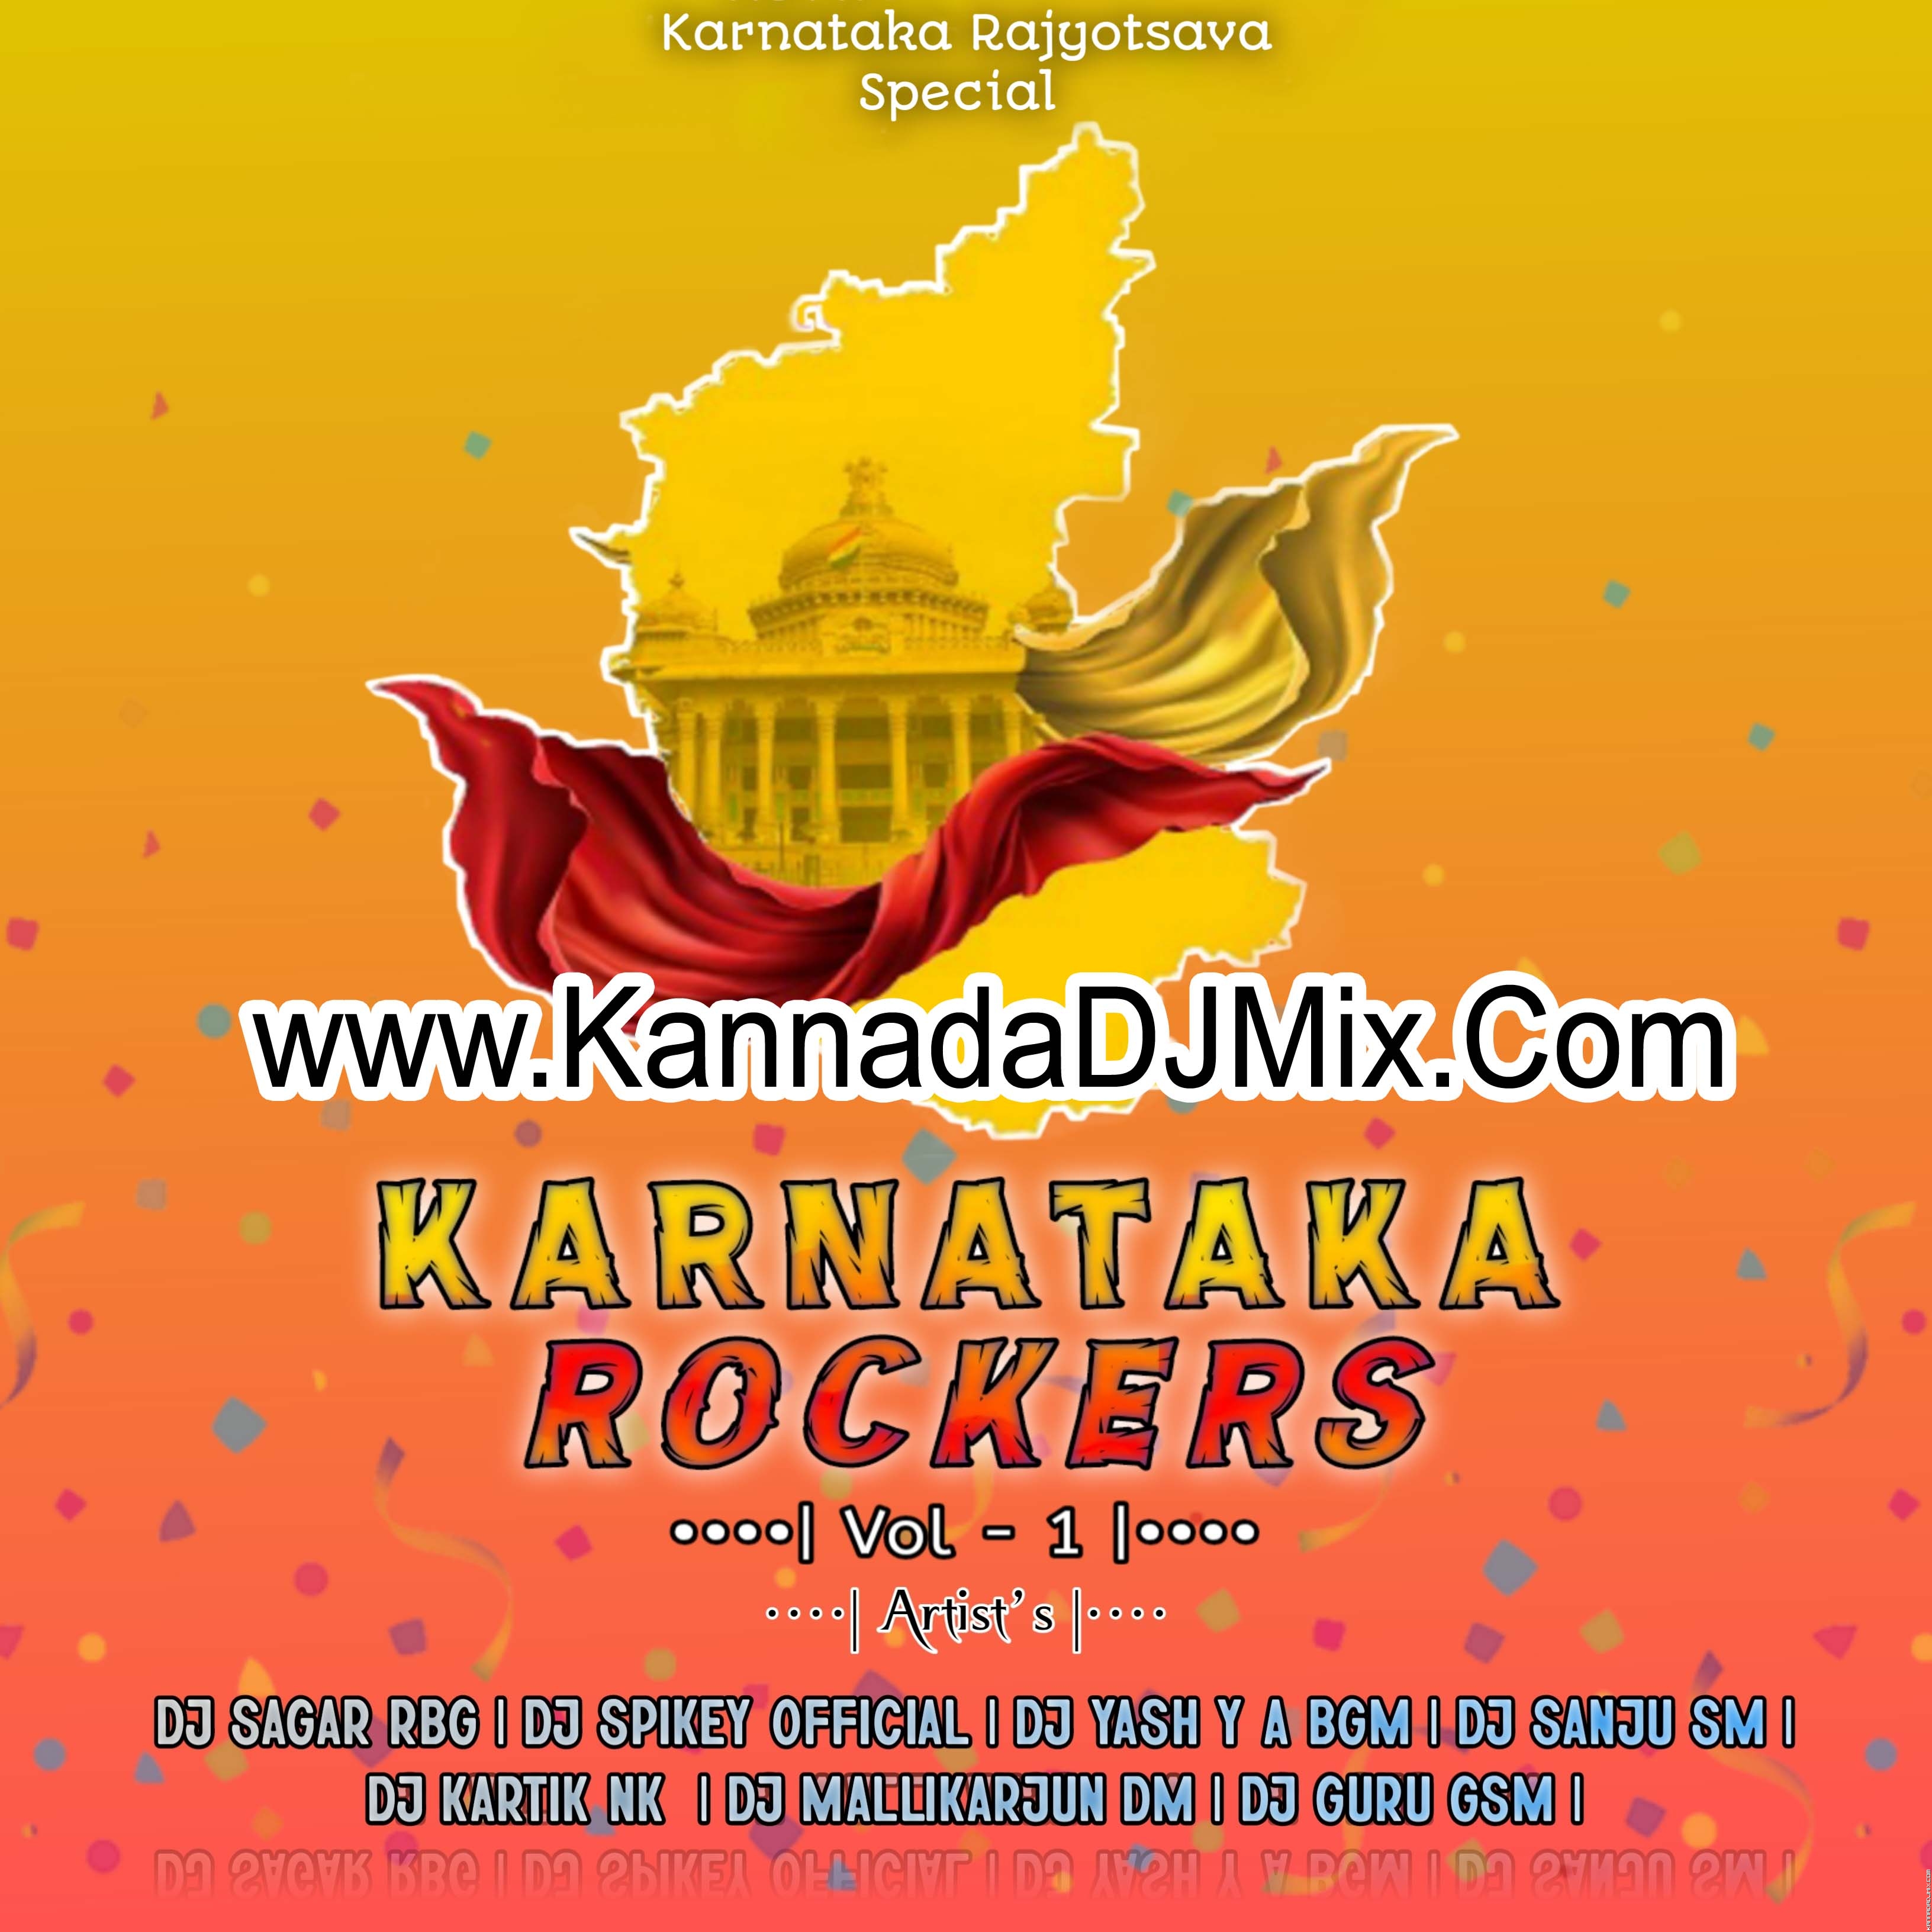 Karnataka Rockers Vol-1